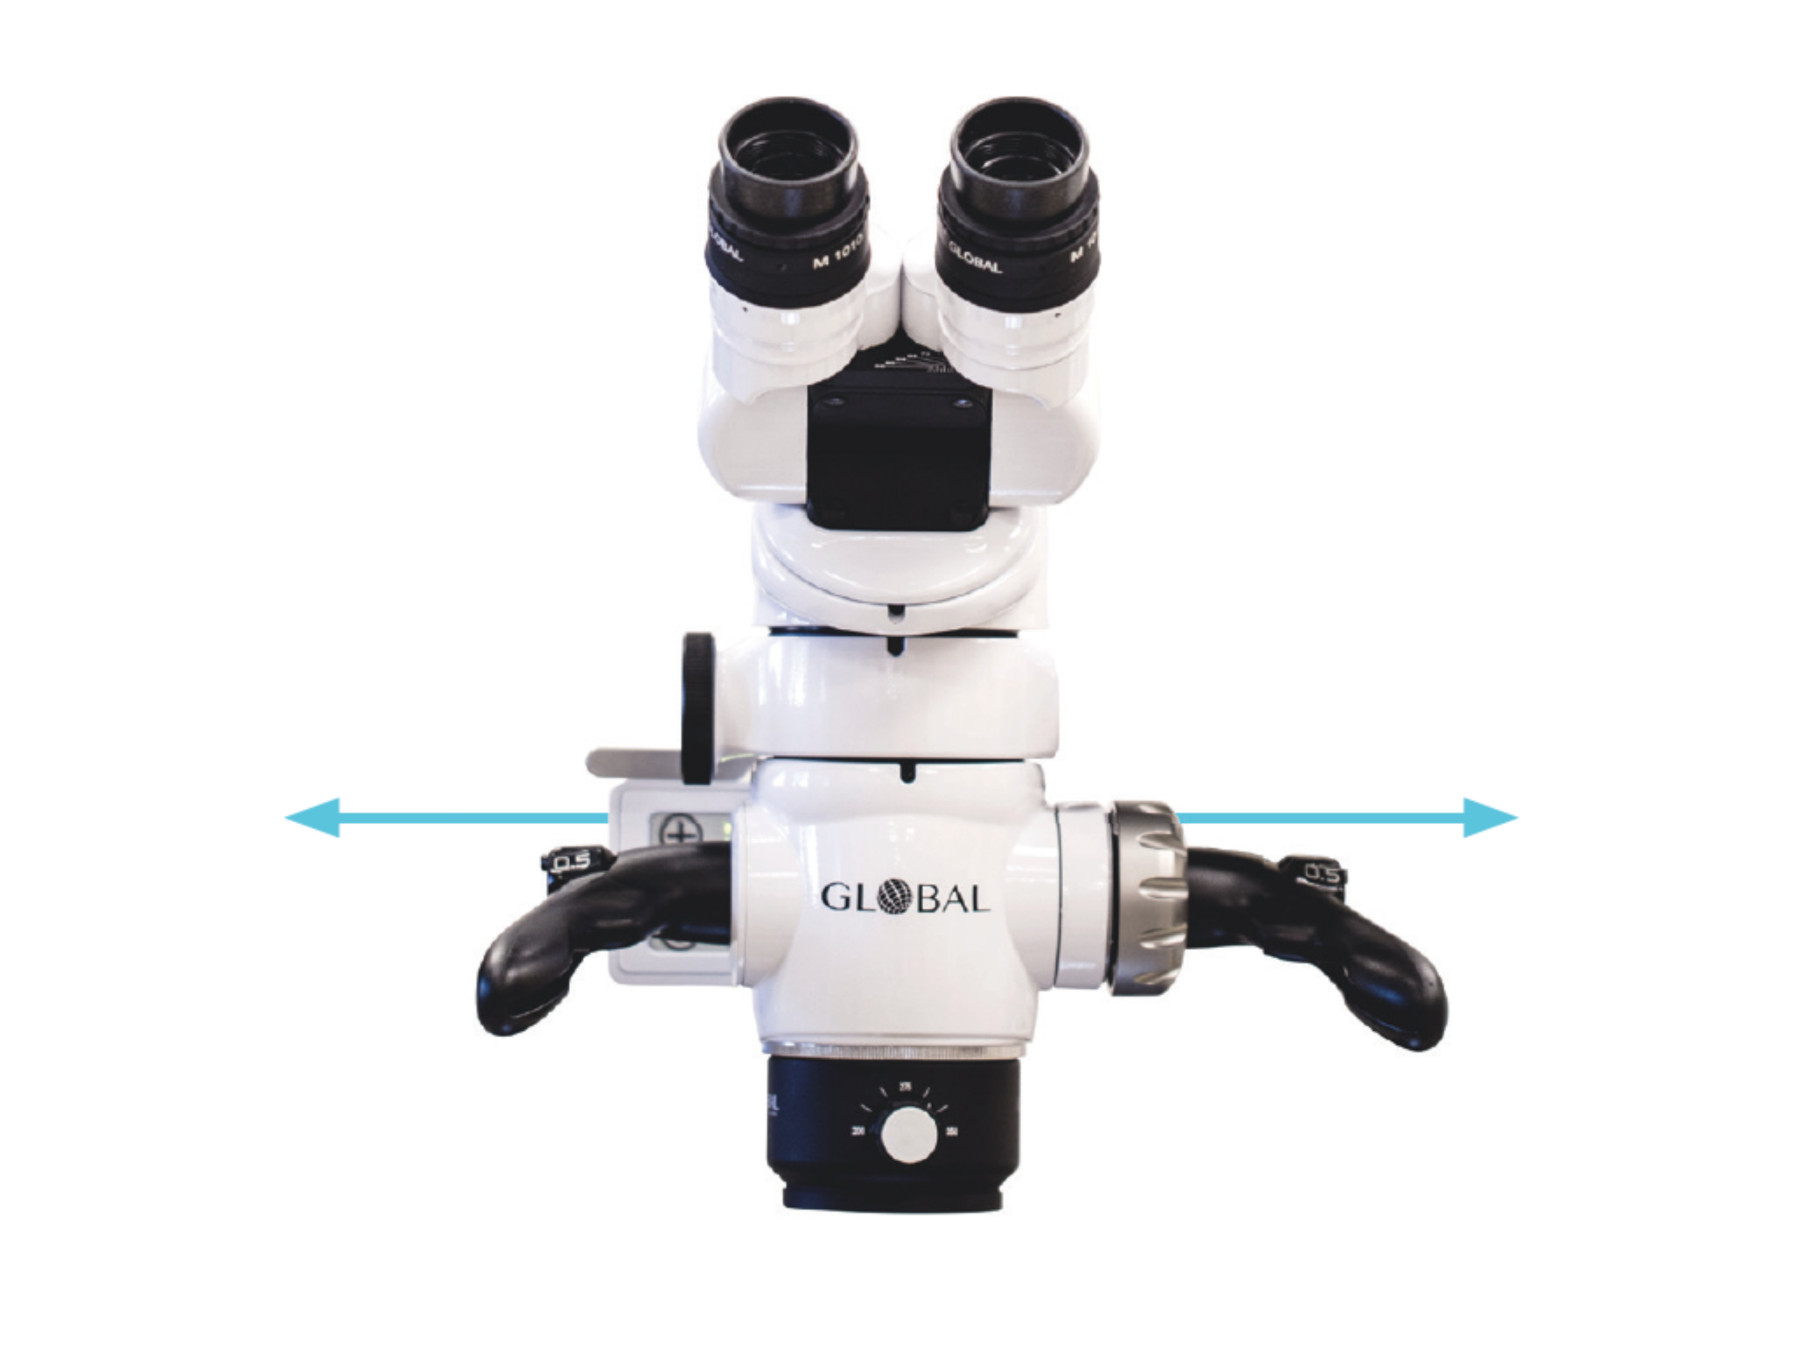 GLOBAL Dental-Mikroskope - Ergonomie